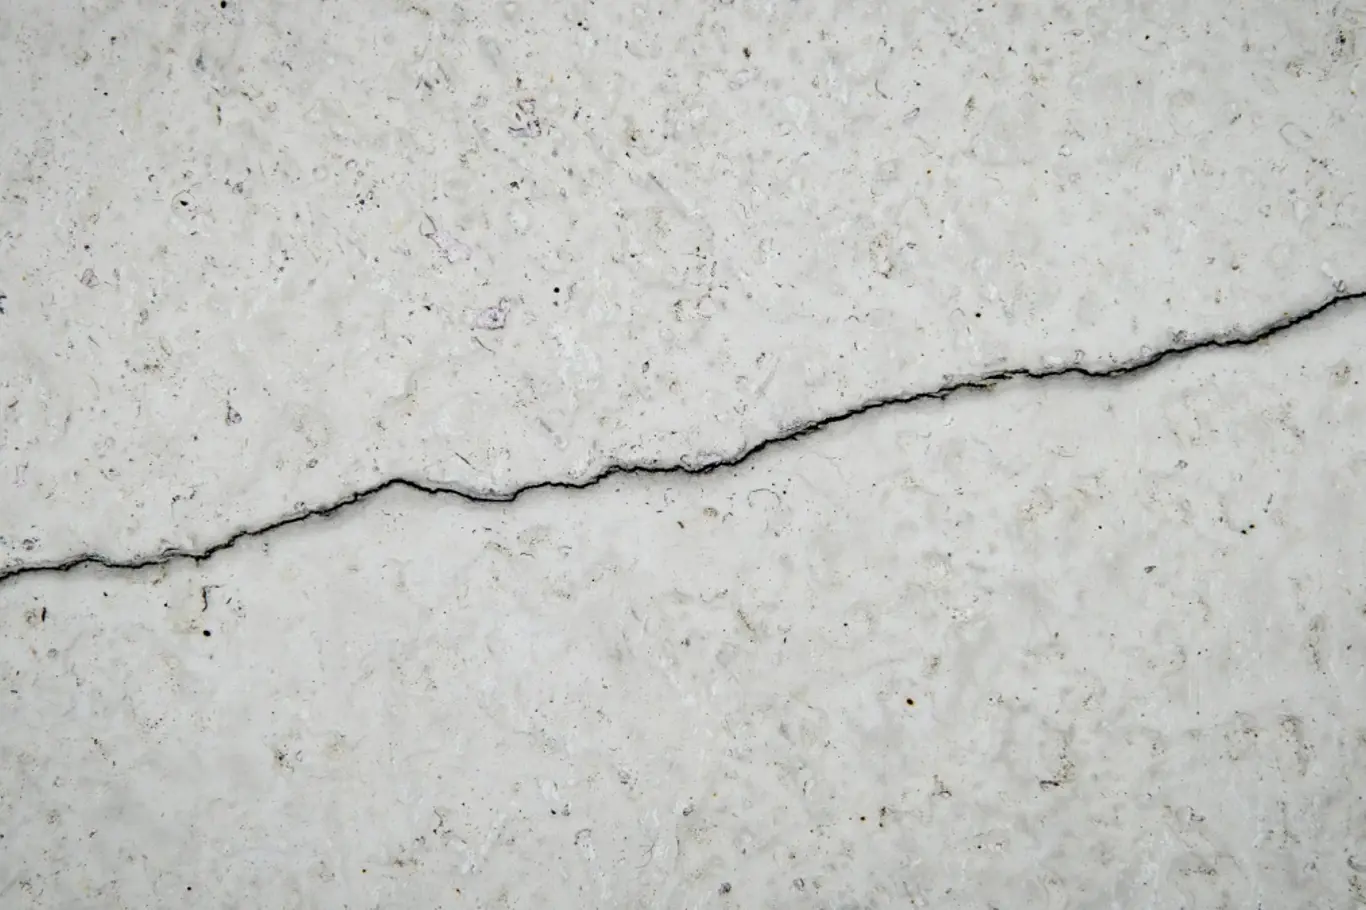 Prasklina v betonu